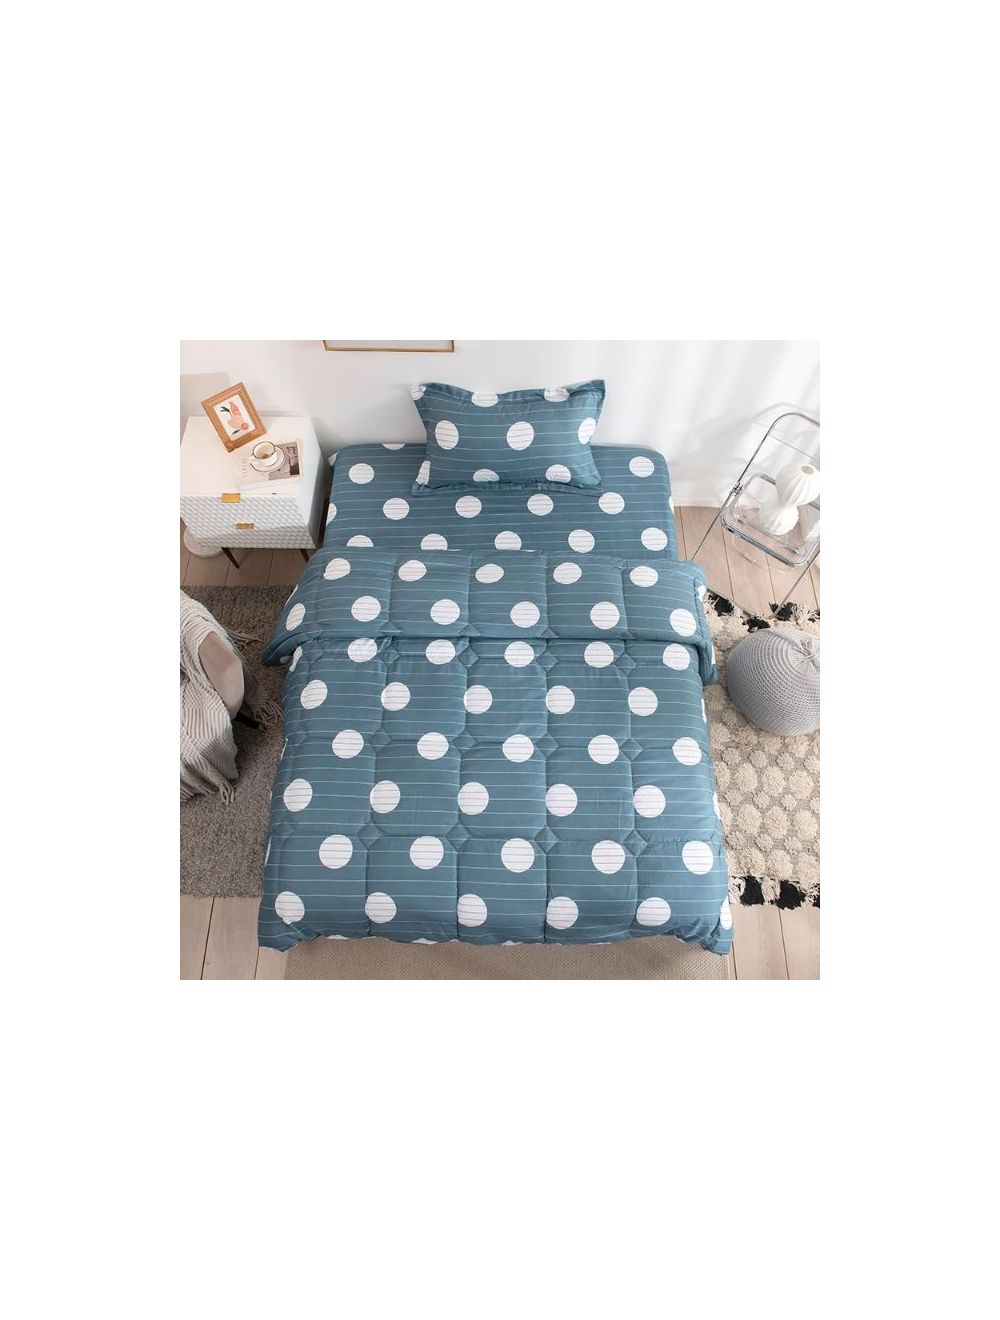 RISHAHOME 3 Piece Single Size Comforter Set (1 comforter+1 fitted sheet+1 Large pillowcase) Microfibre Charming Lifetime 150x200 cm-CLSMH/03/96